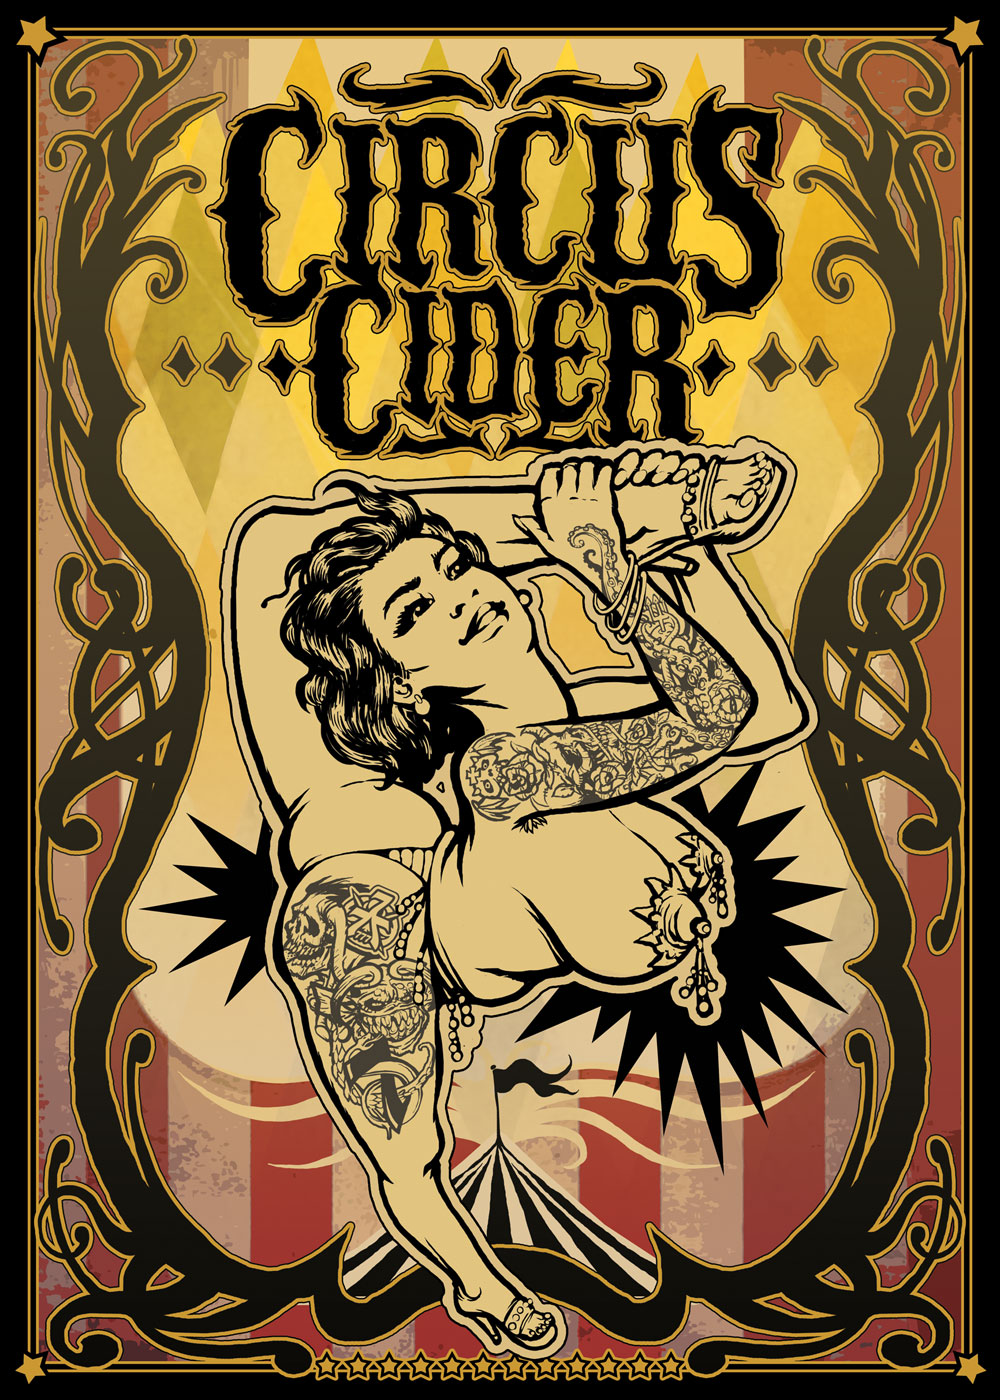 Circus Cider